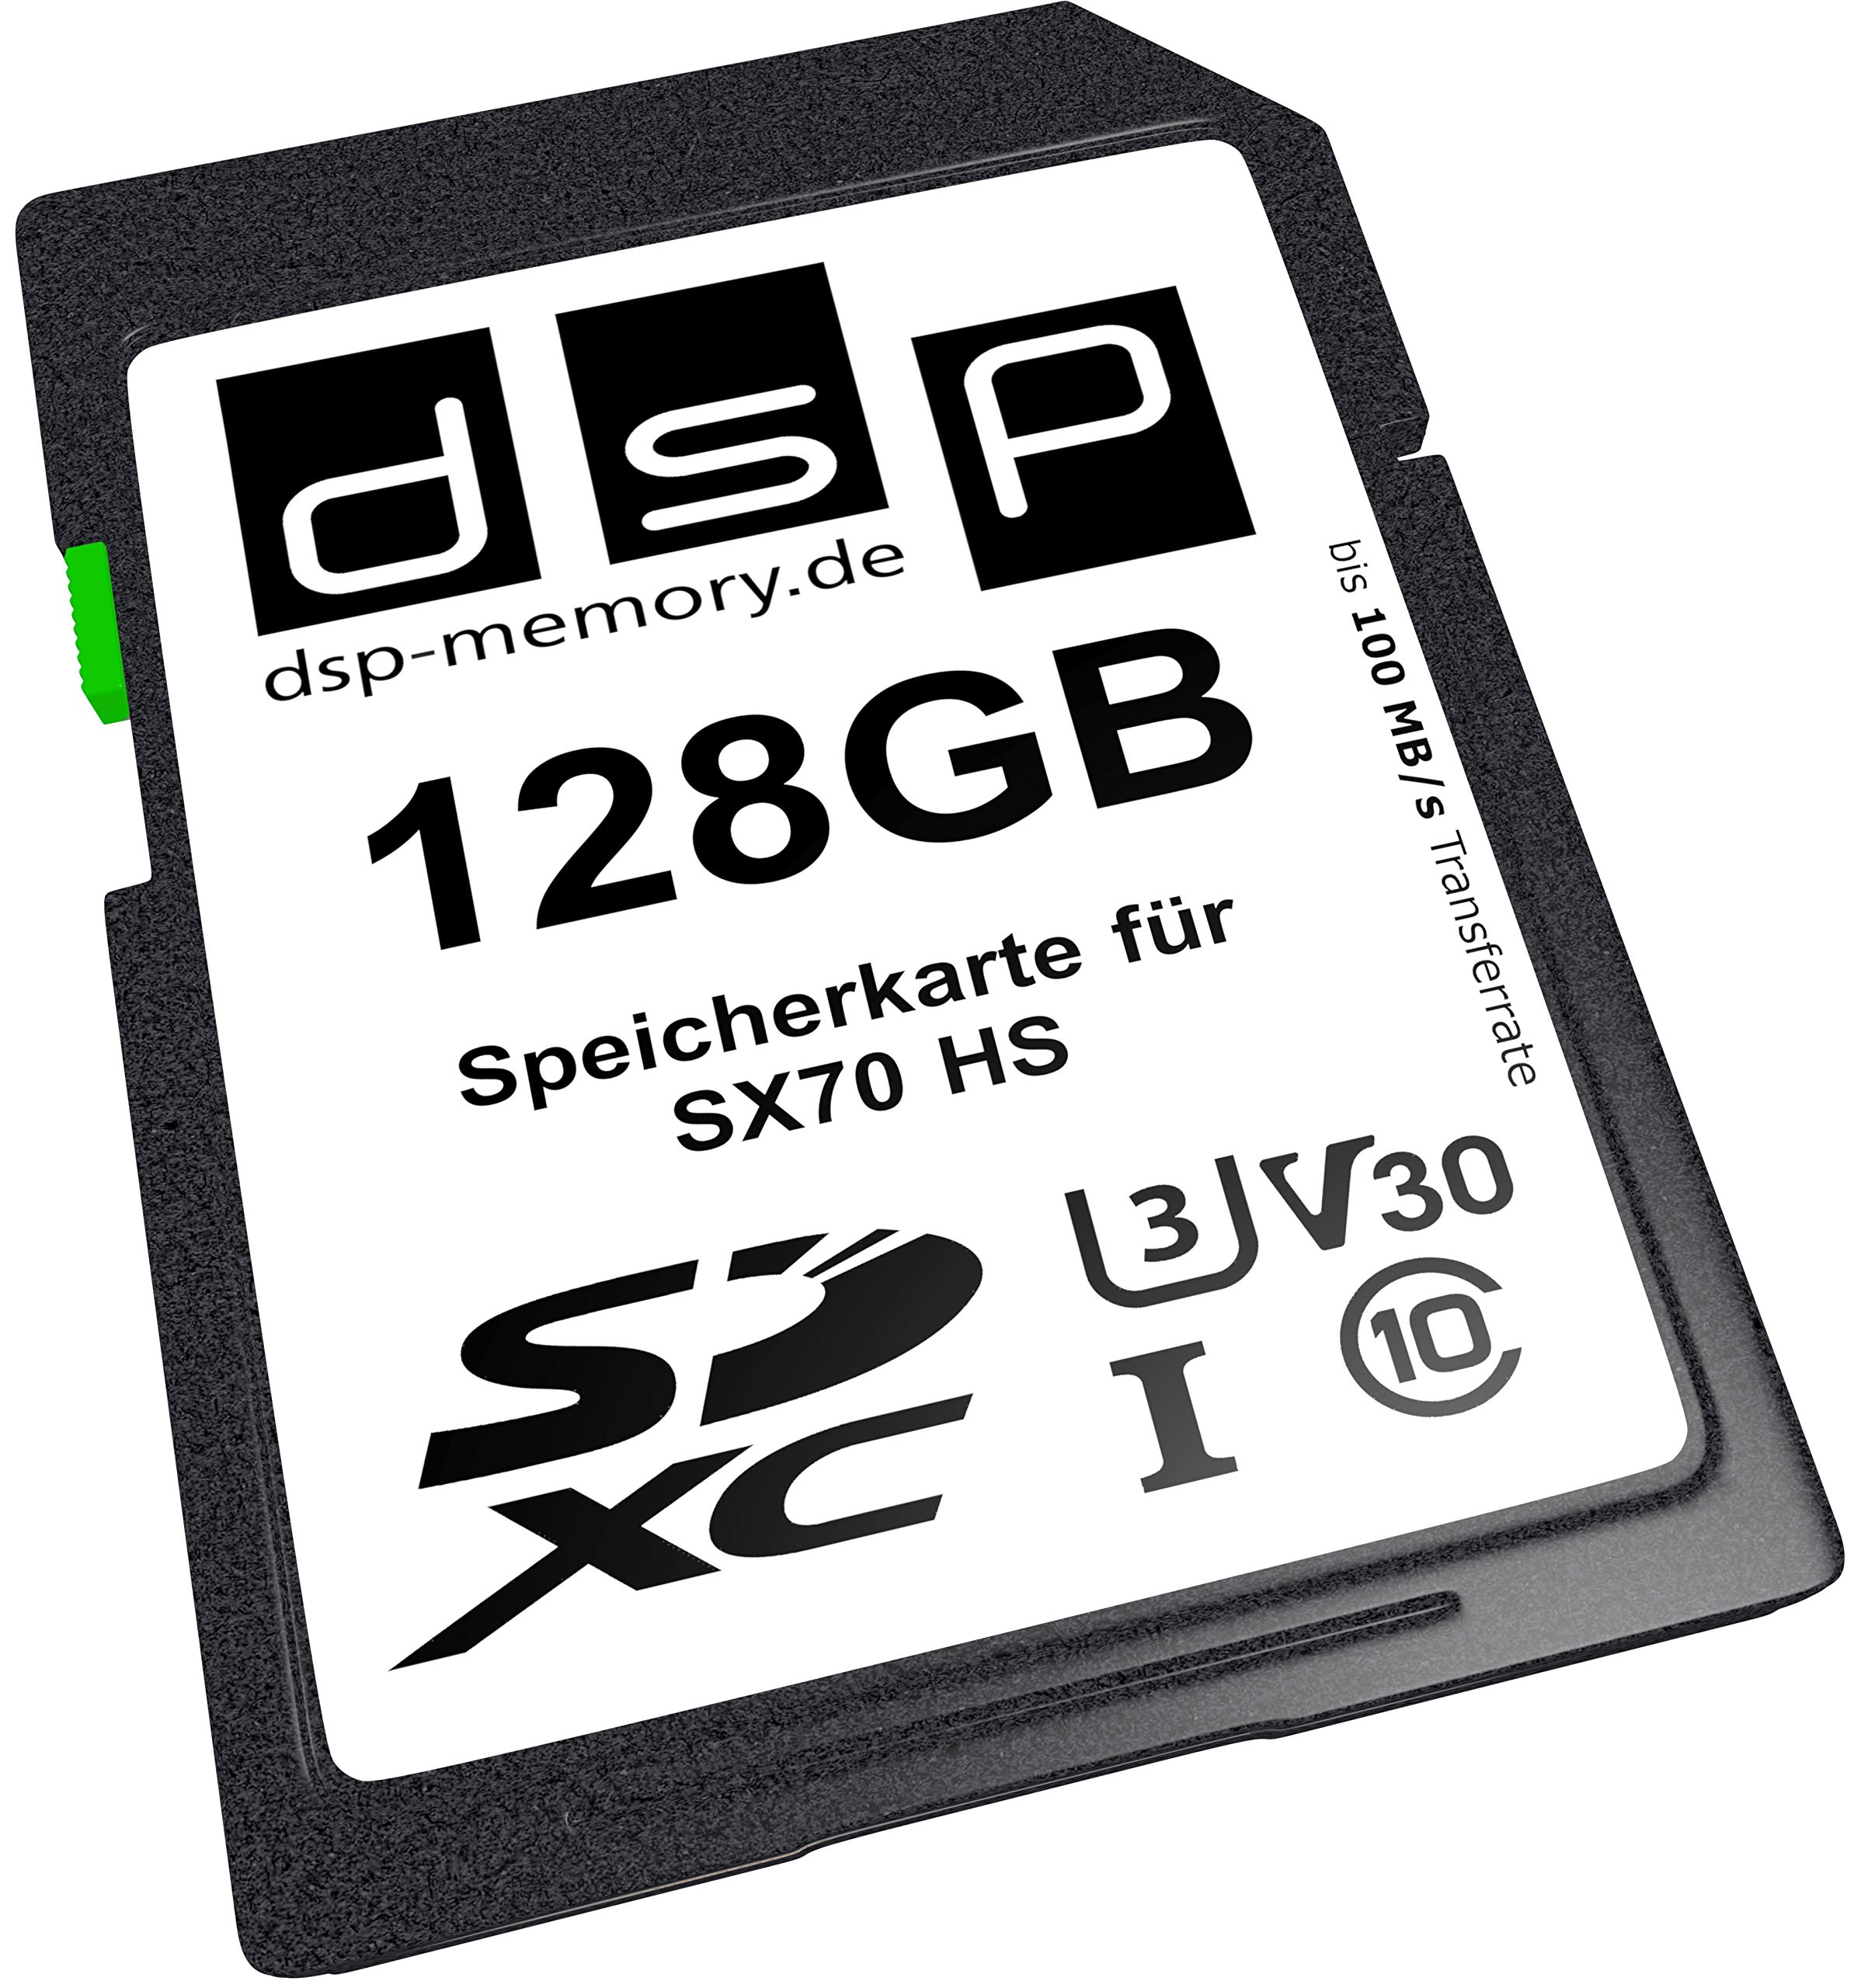 128GB Professional V30 Speicherkarte für SX70 HS Digitalkamera